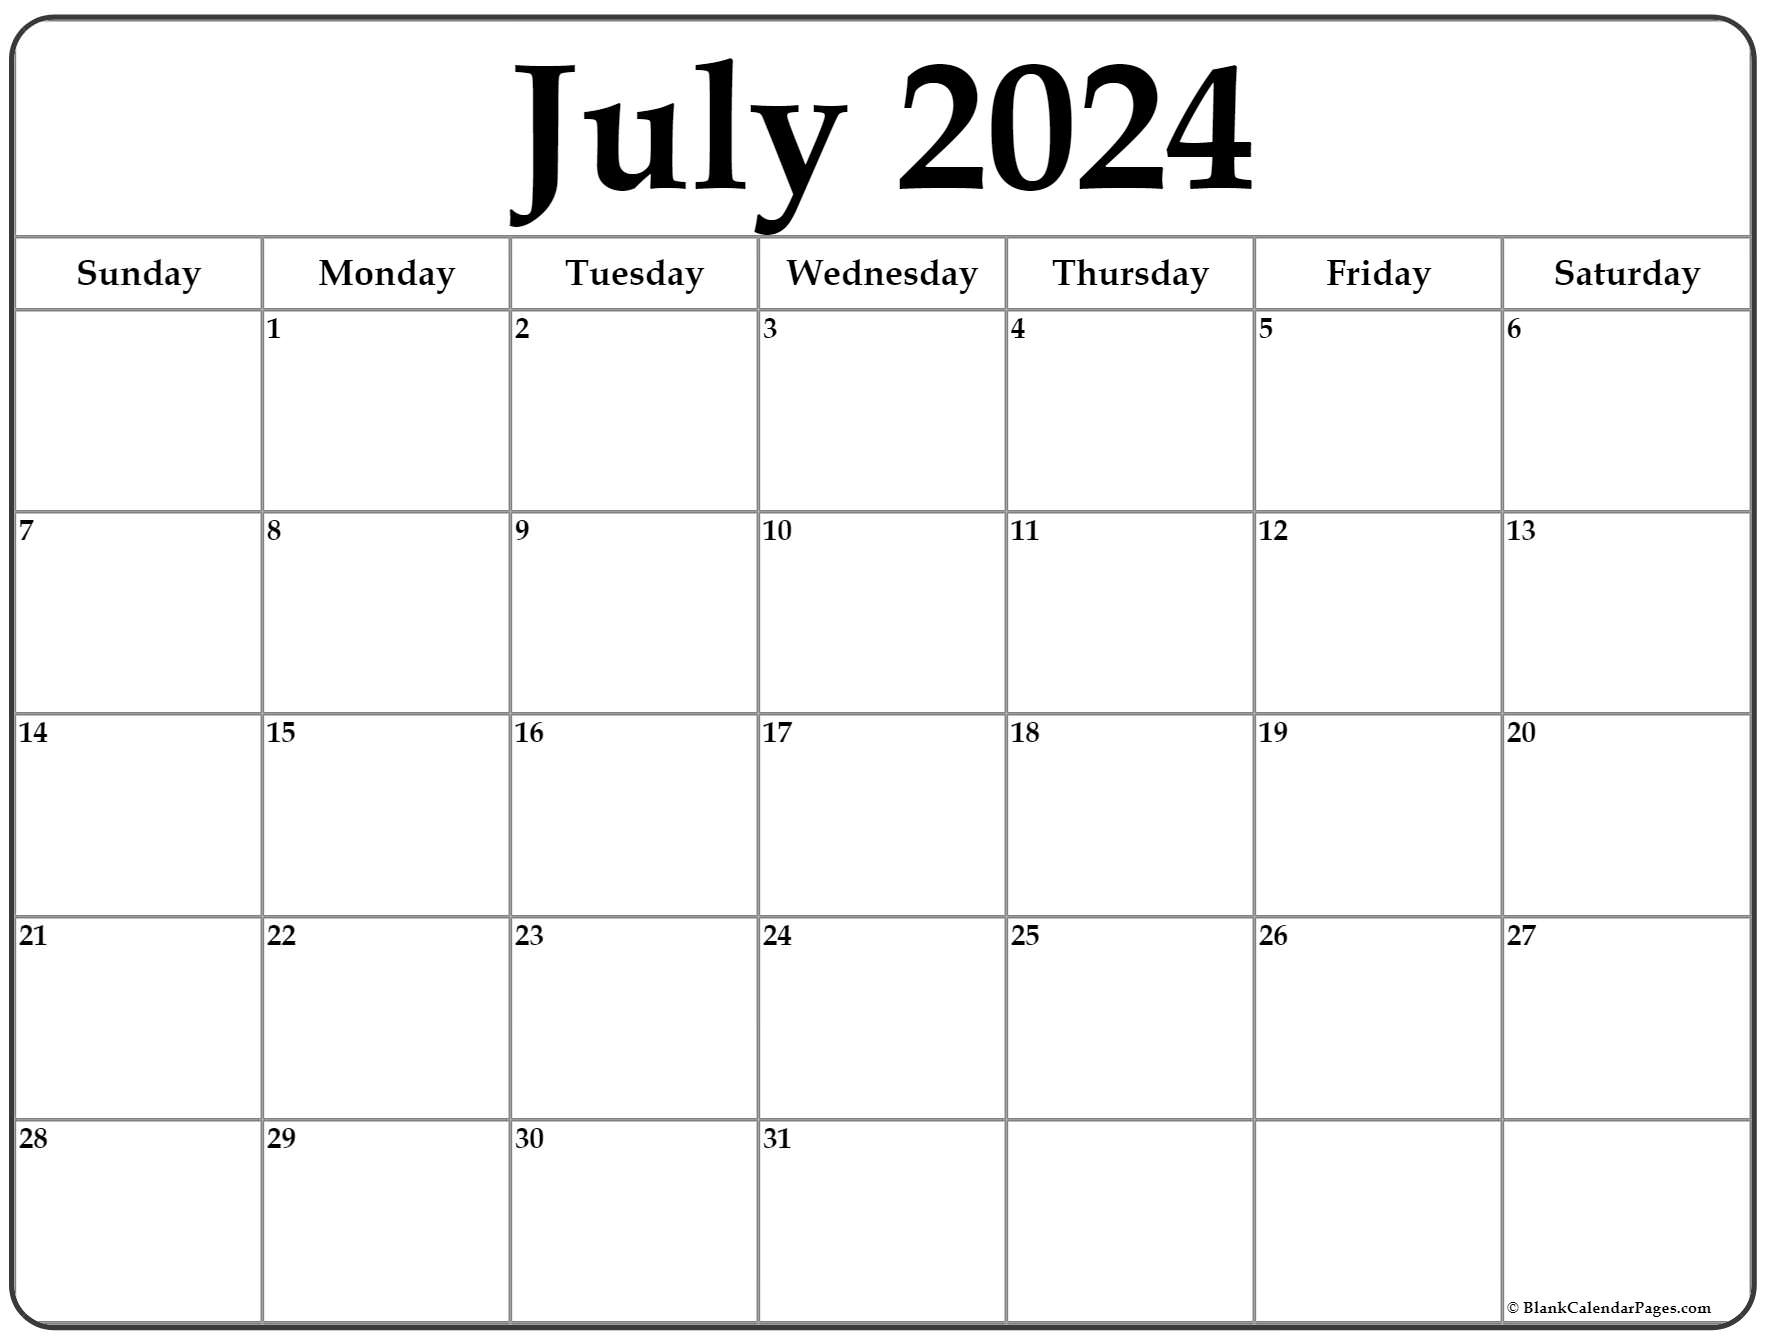 July 2024 Calendar | Free Printable Calendar inside Free Printable Blank Calendar July 2024